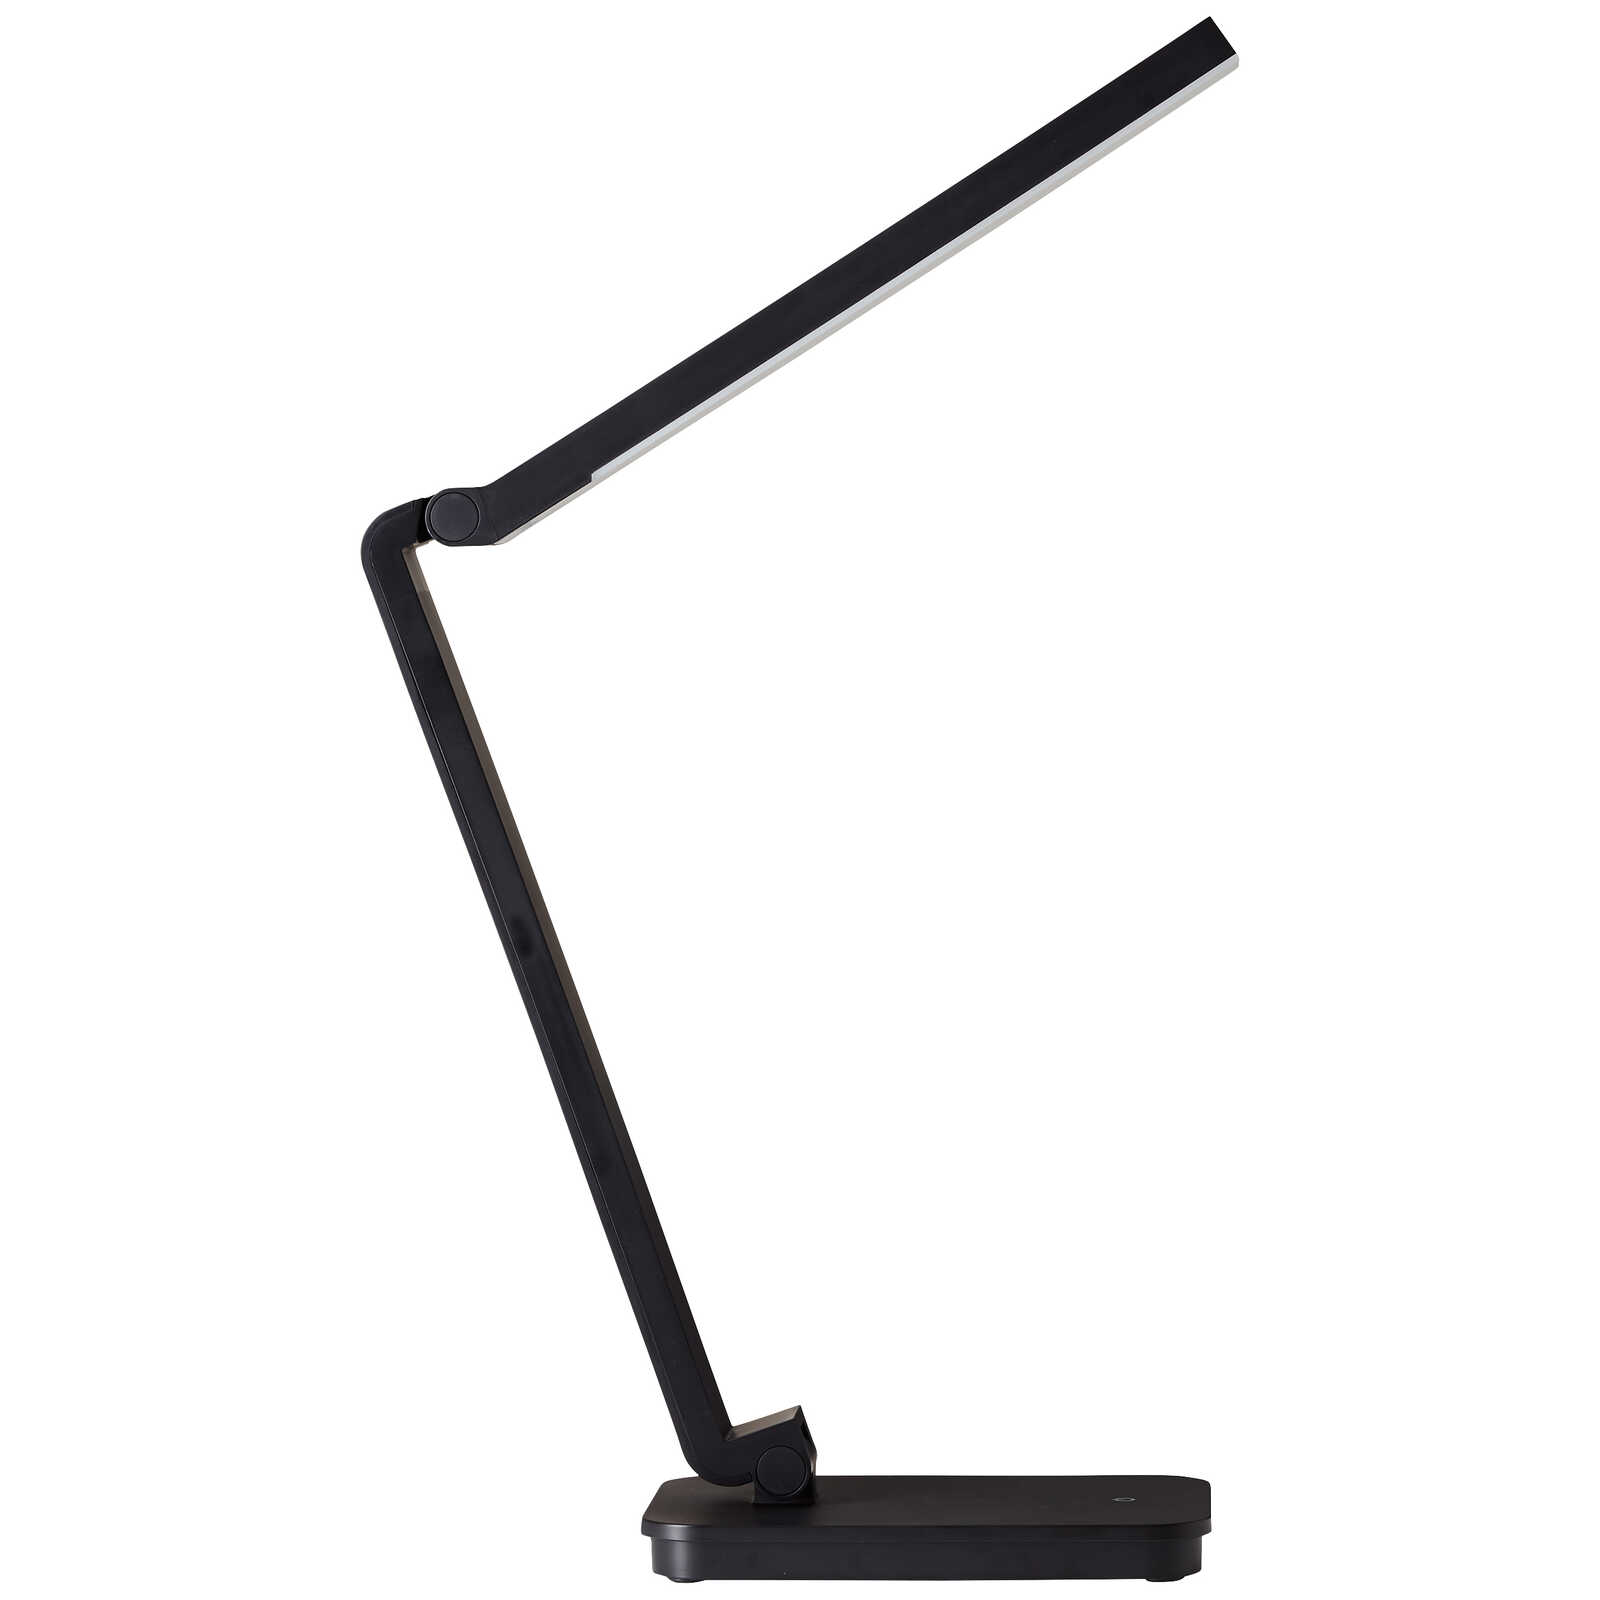             Plastic table lamp - Romy 2 - Black
        